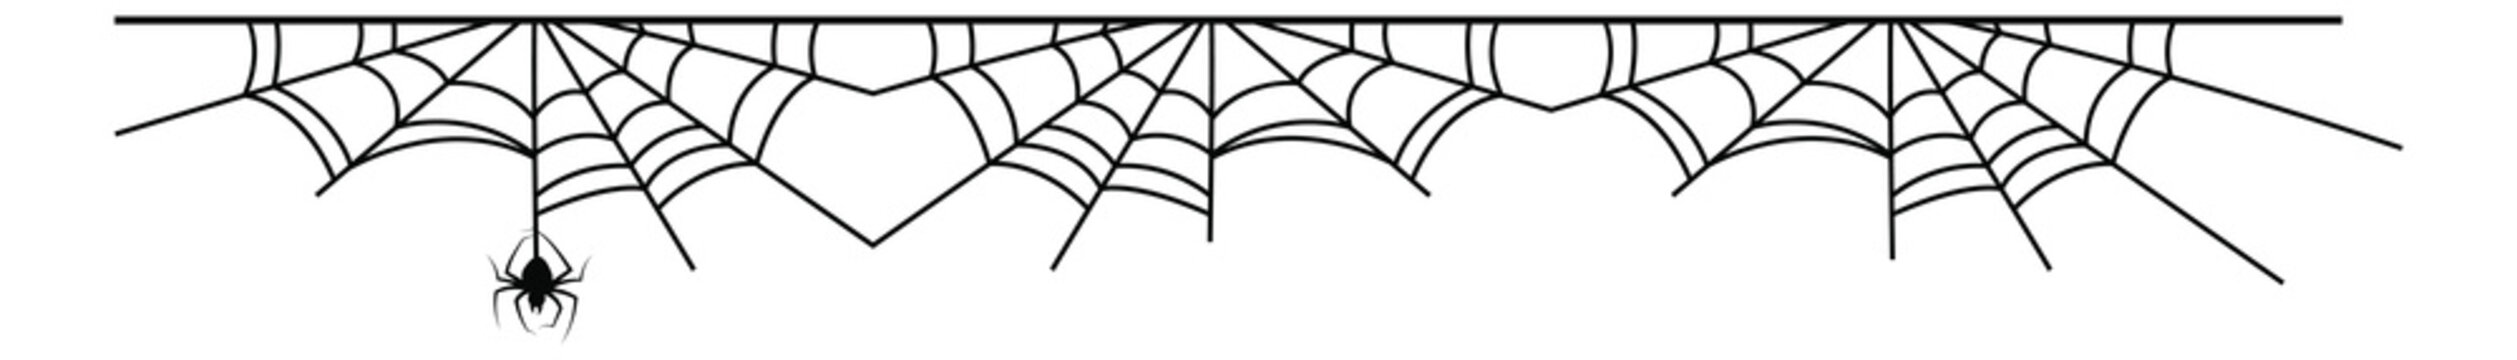 Spider on cobweb decorative divider for halloween designs